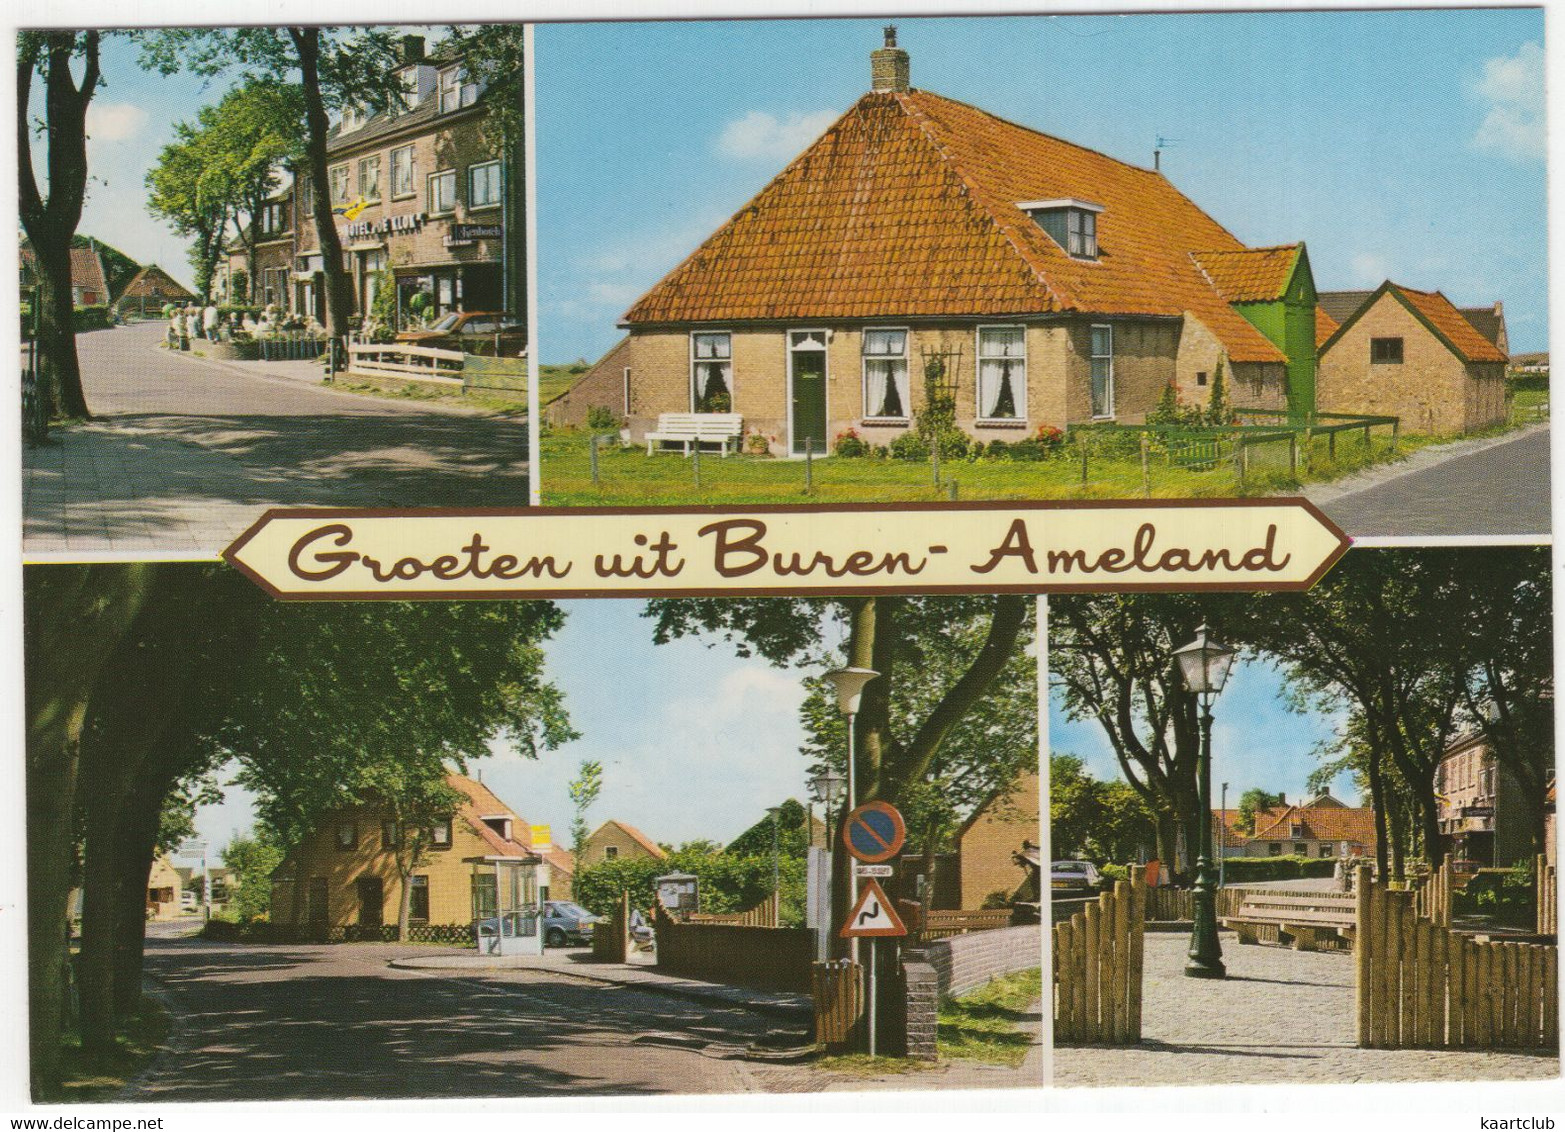 Groeten Uit Buren - Ameland -  (Wadden, Nederland / Holland) - Nr. AMD 72 - O.a. Hotel 'De Klok' - Ameland